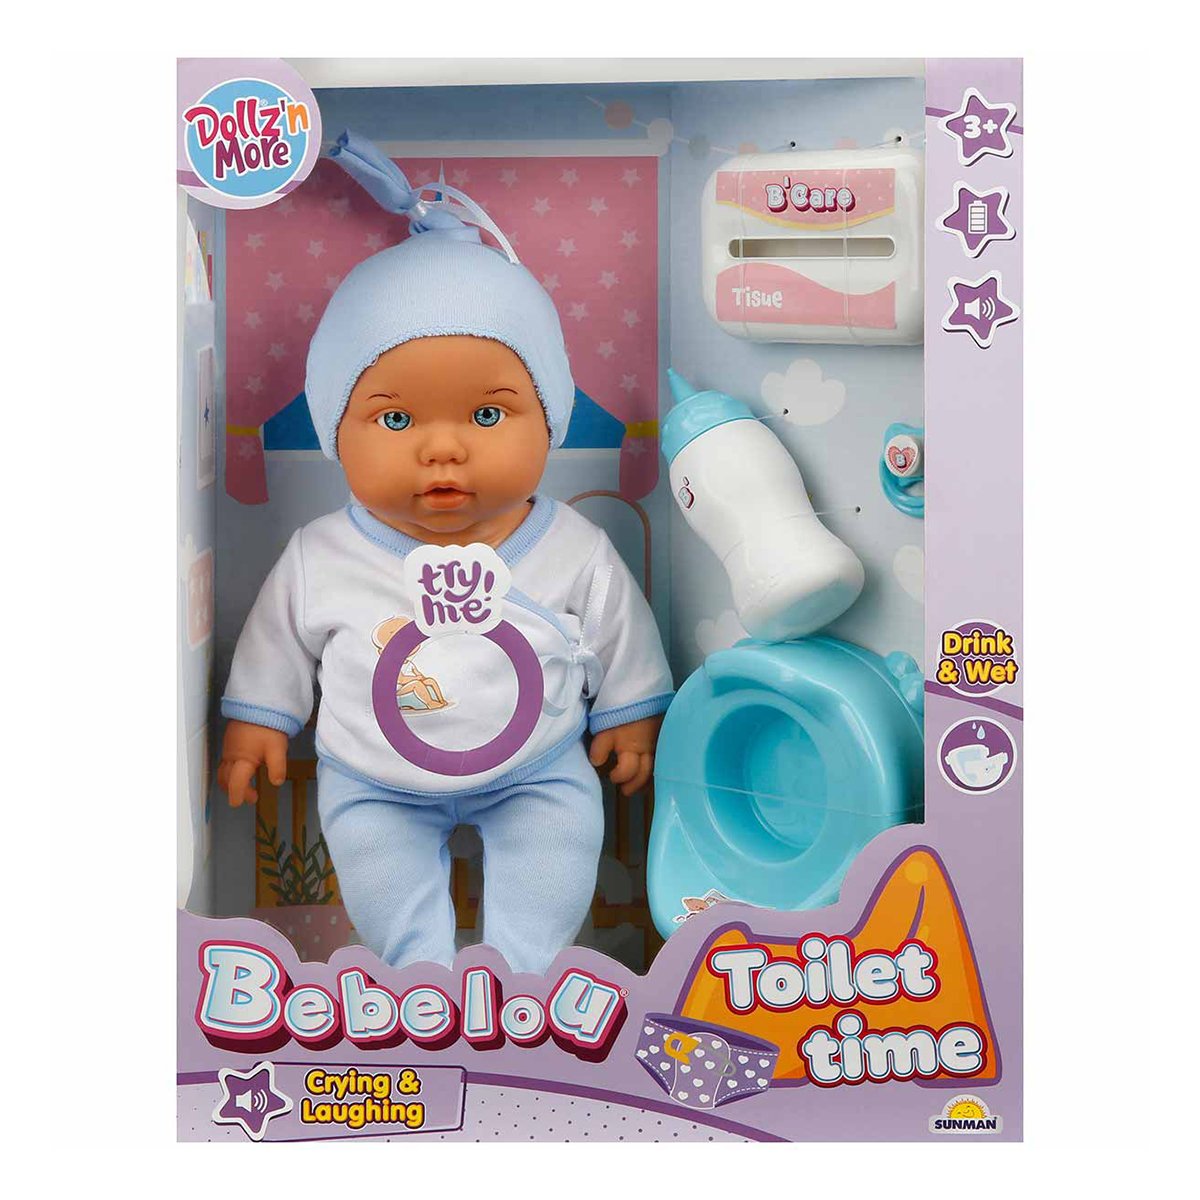 Papusa bebelus Bebelou, Dollzn More, Toilet Time, 35 cm, albastru albastru